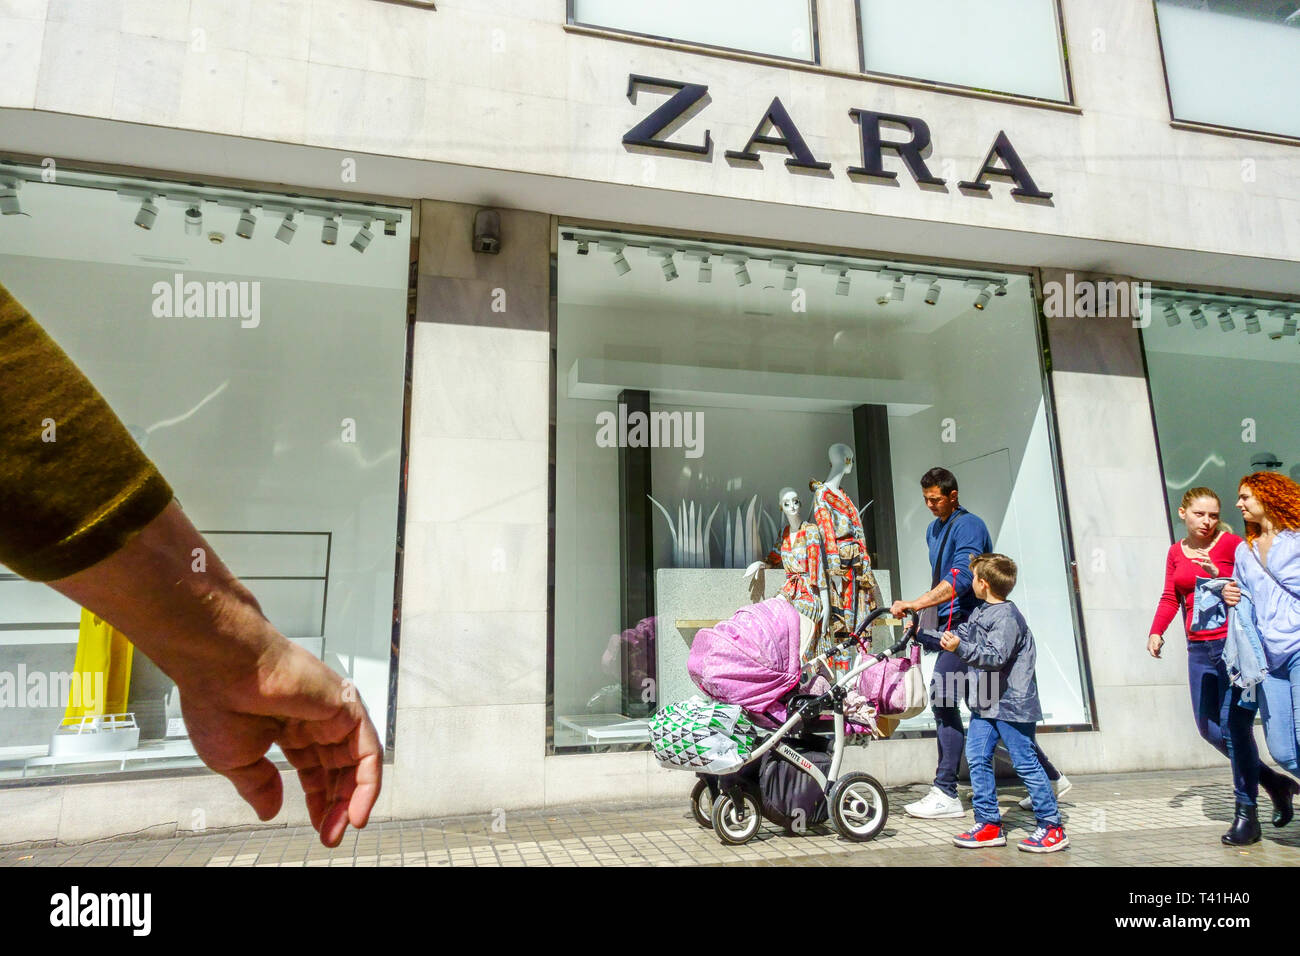 https://c8.alamy.com/comp/T41HA0/valencia-people-shopping-outside-zara-store-spain-europe-street-zara-shop-sign-street-view-valencia-spain-europe-man-pushing-pram-T41HA0.jpg